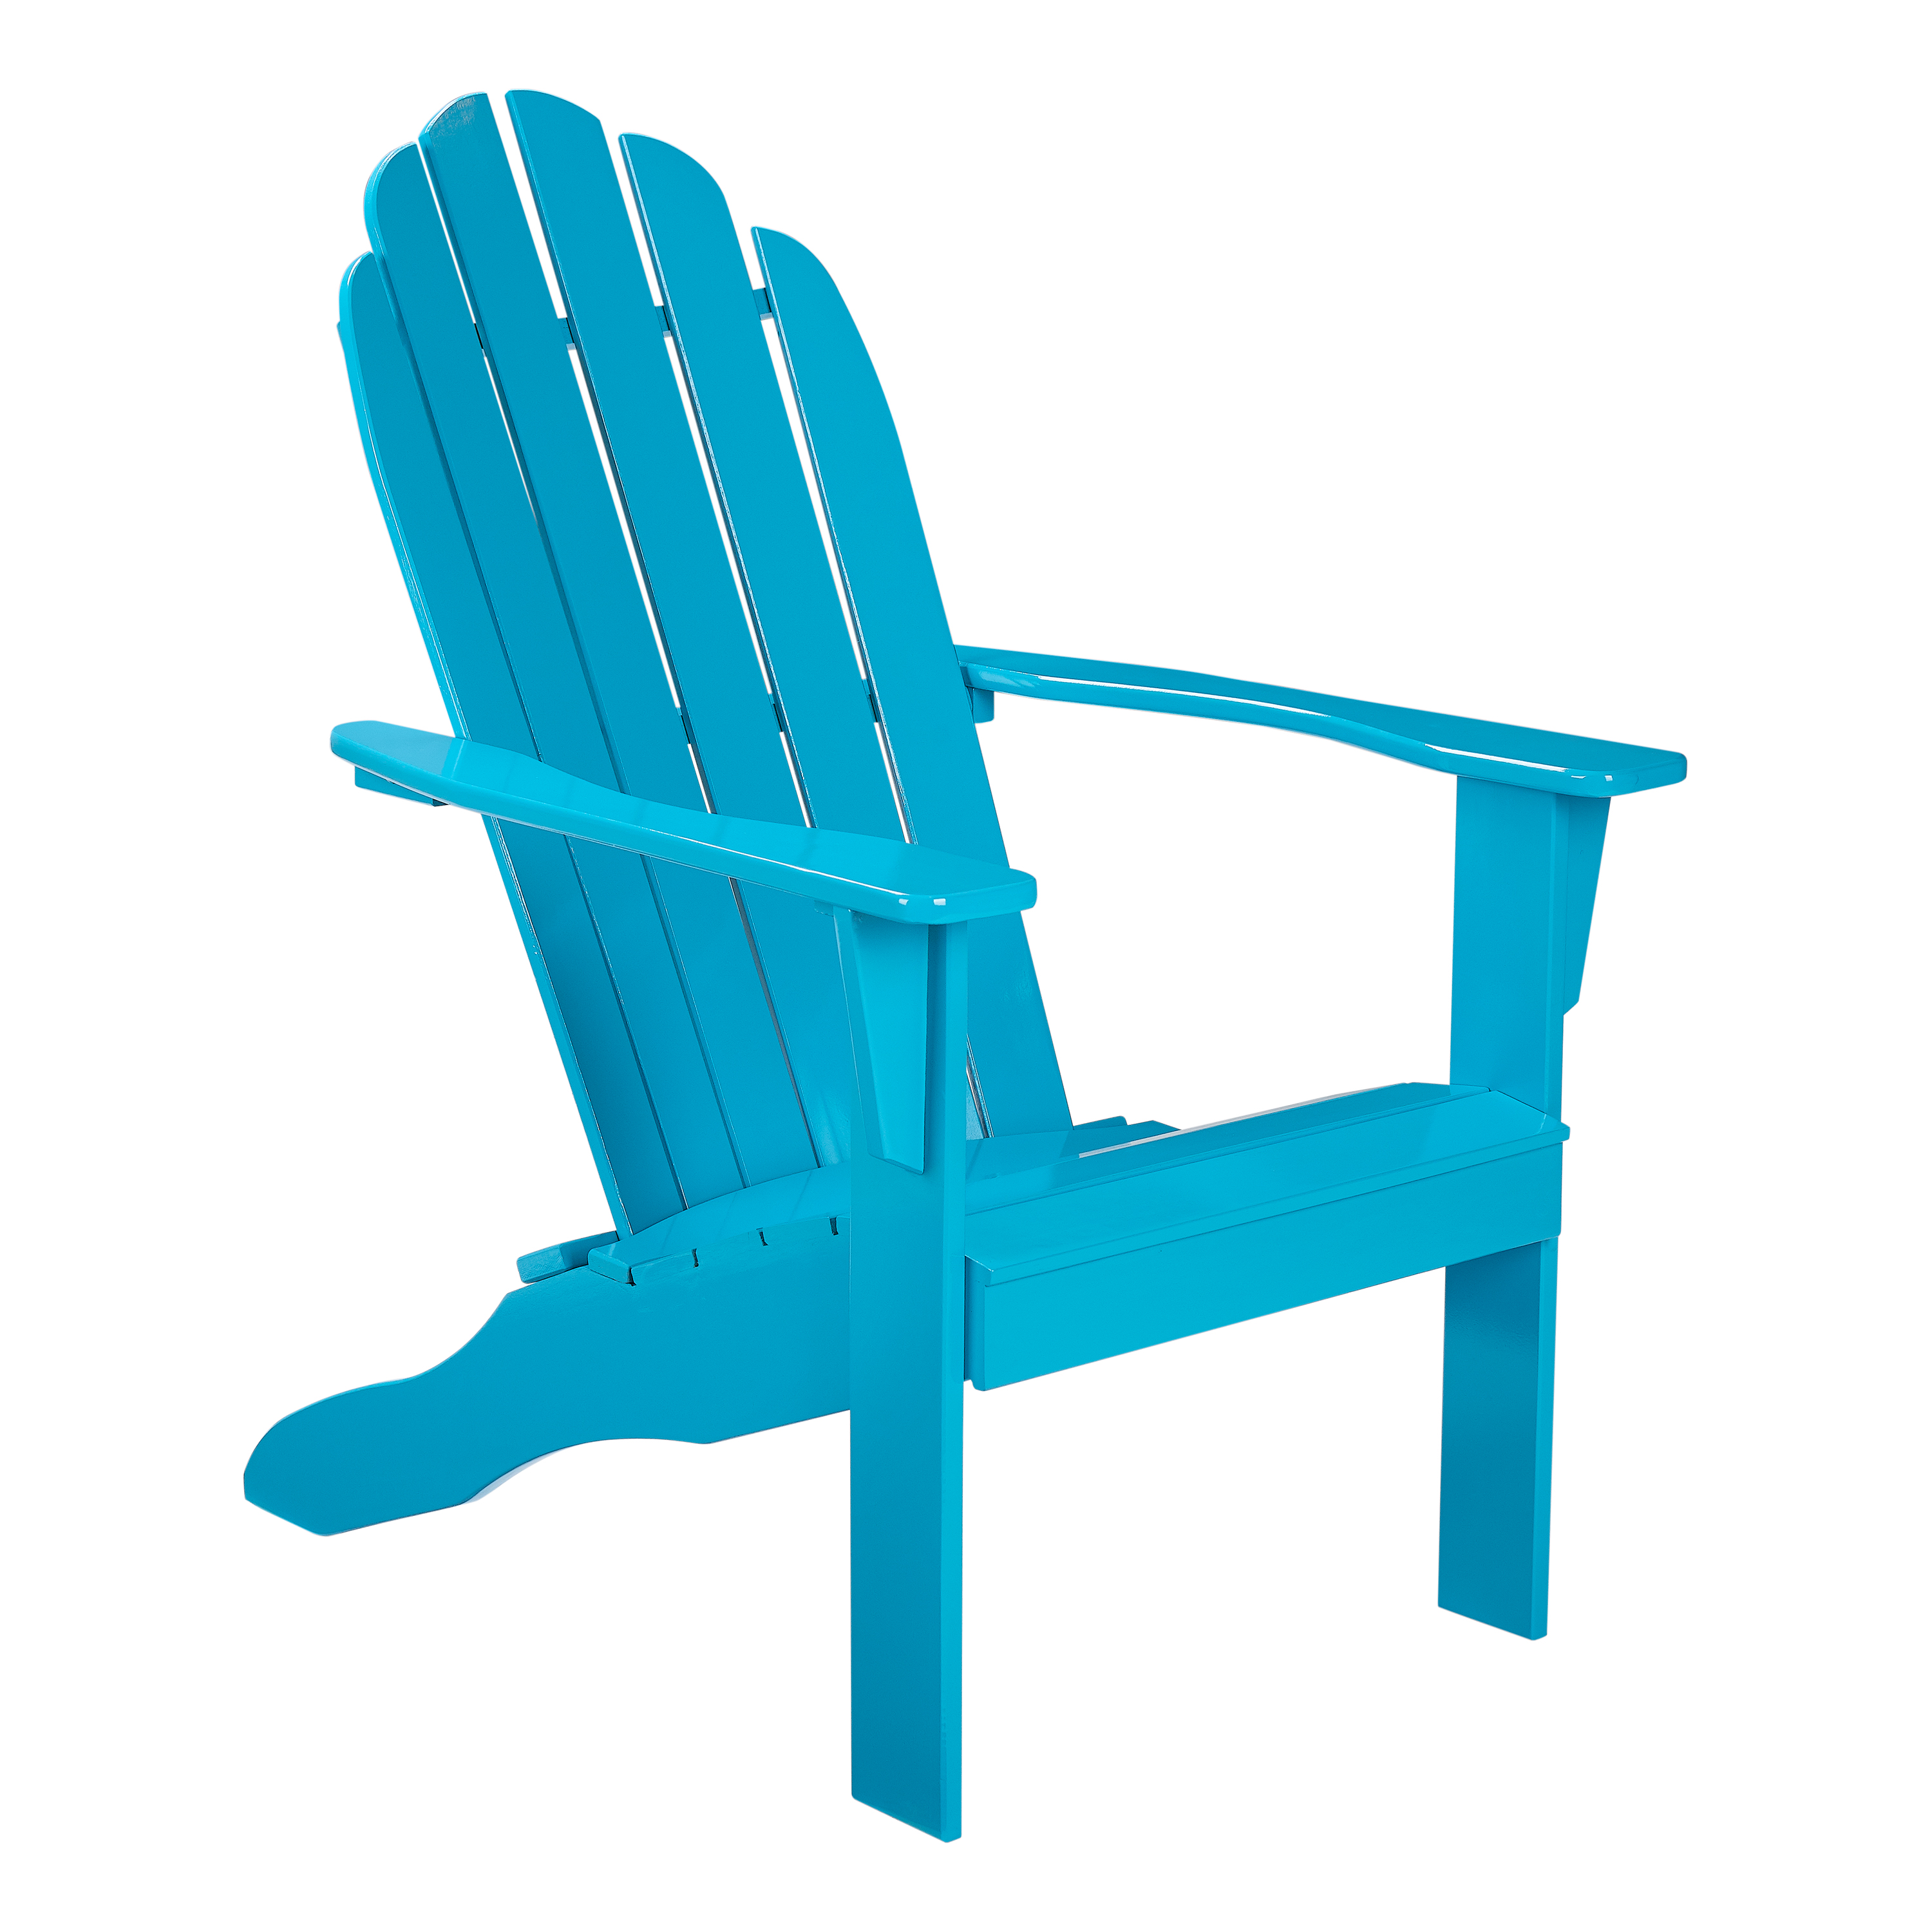 Mainstays Rubberwood Adirondack Chair - Turquoise - image 1 of 8